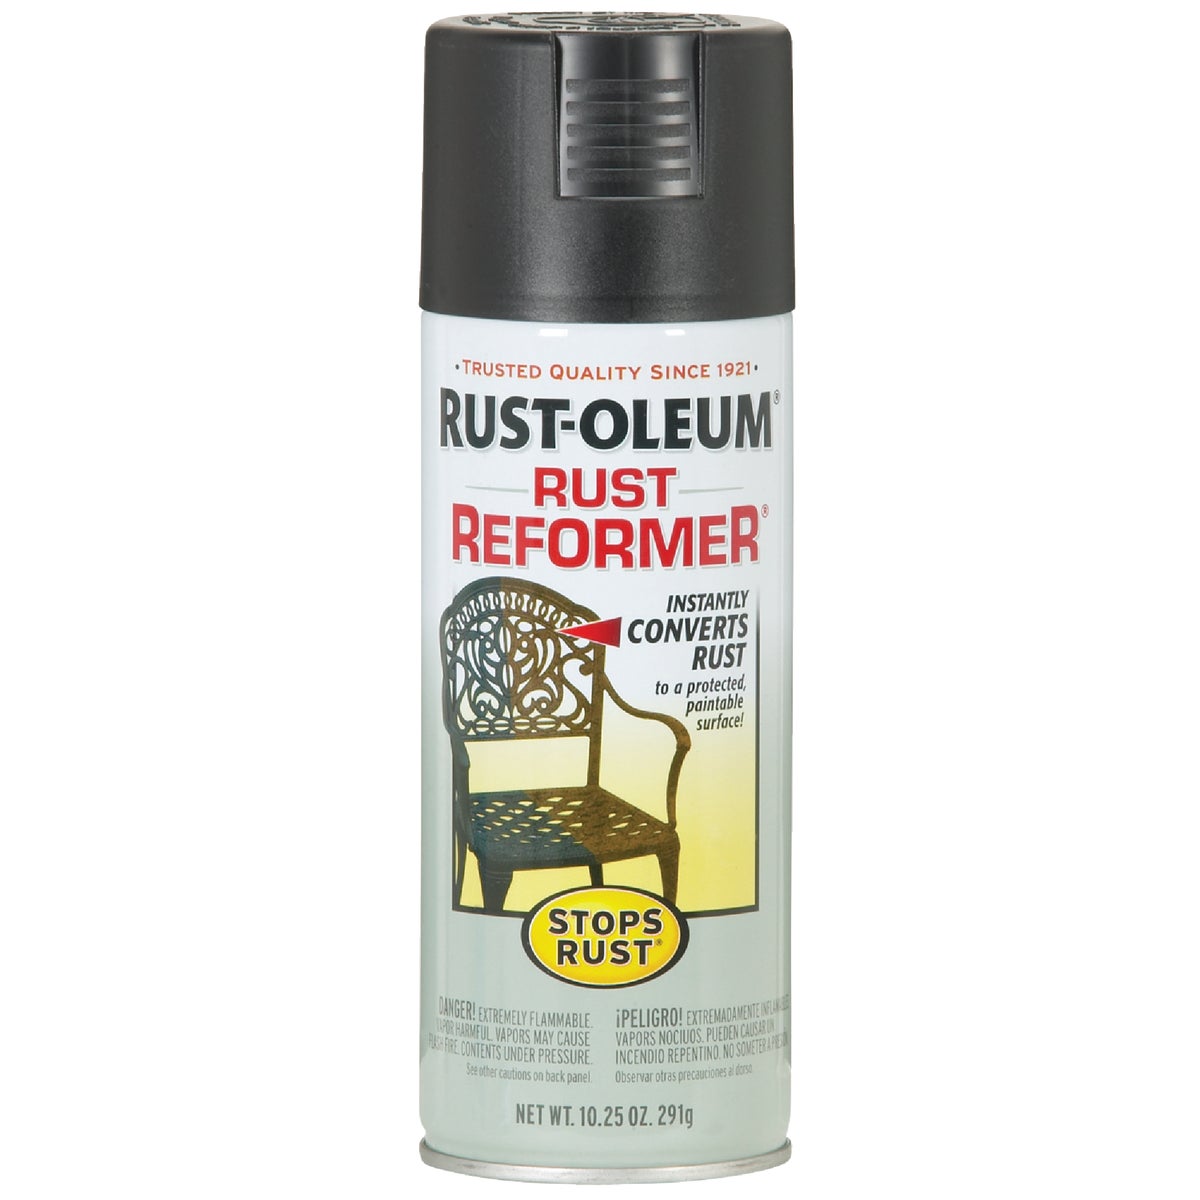 Rust-Oleum Stops Rust 10.25 Oz. Rust Reformer Spray Primer